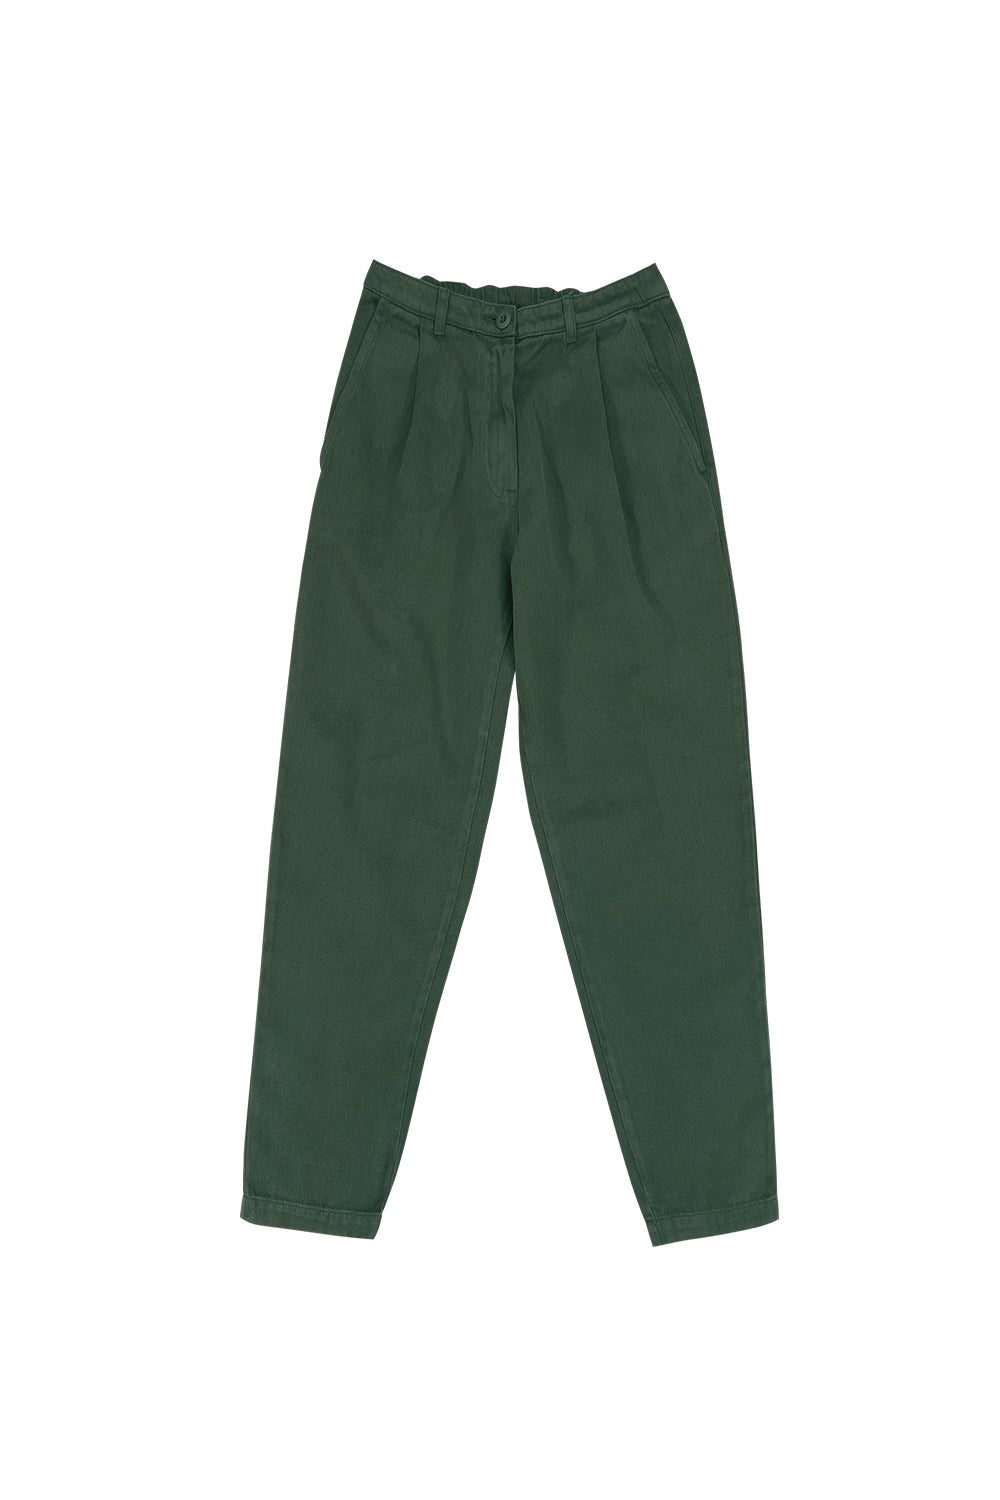 Acuma Pant | Jungmaven Hemp Clothing & Accessories / Color: Hunter Green